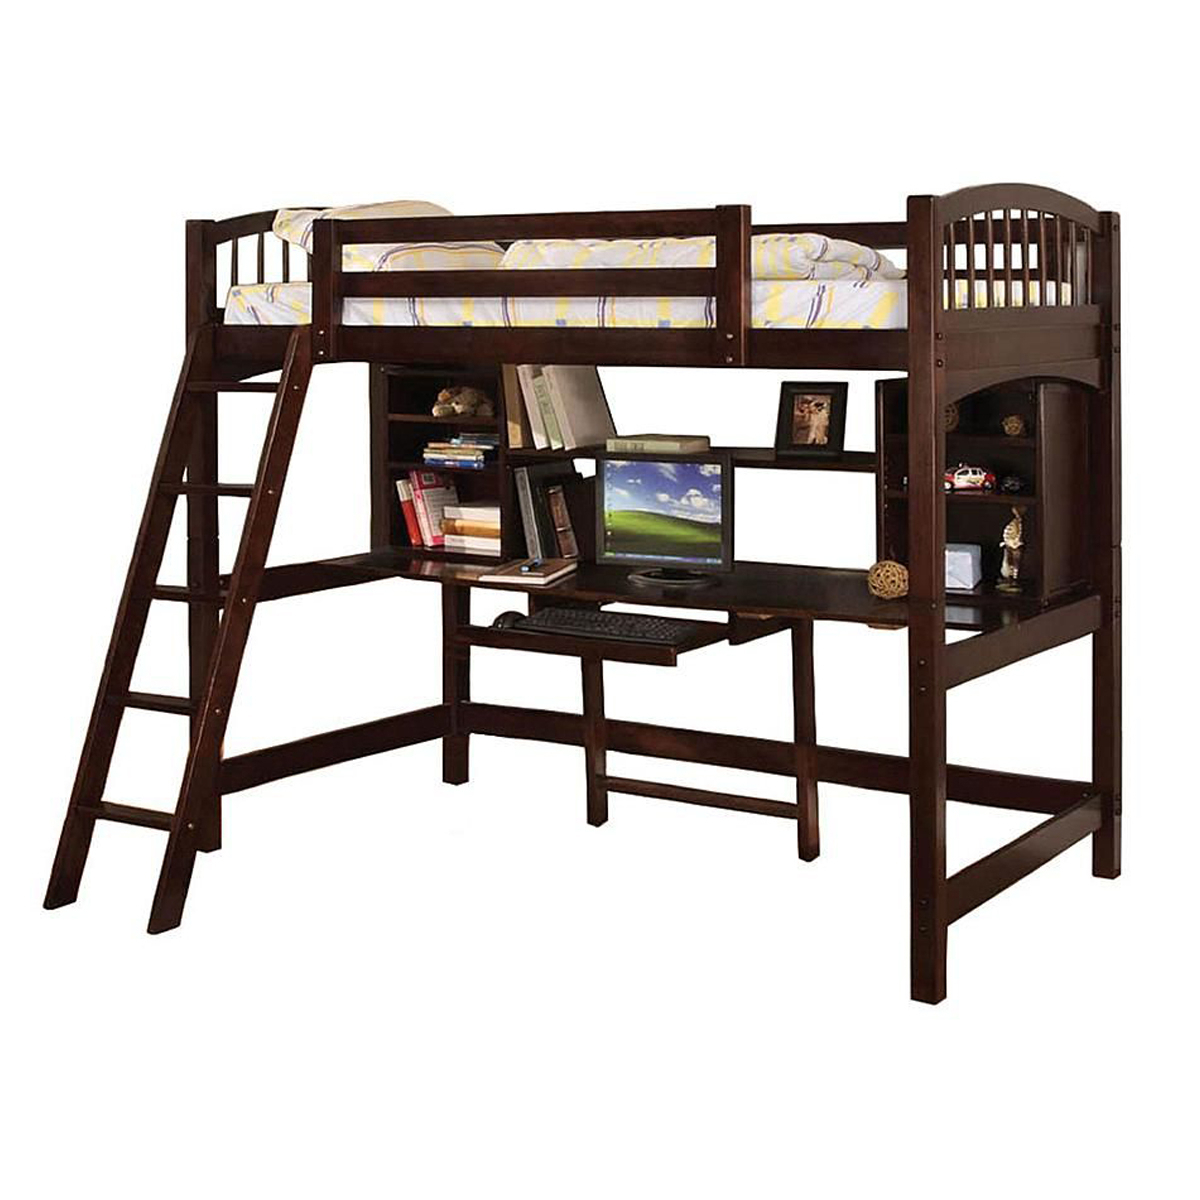 Transitional Style Wooden Bunk Bed With Workstation, Dark Brown- Saltoro Sherpi